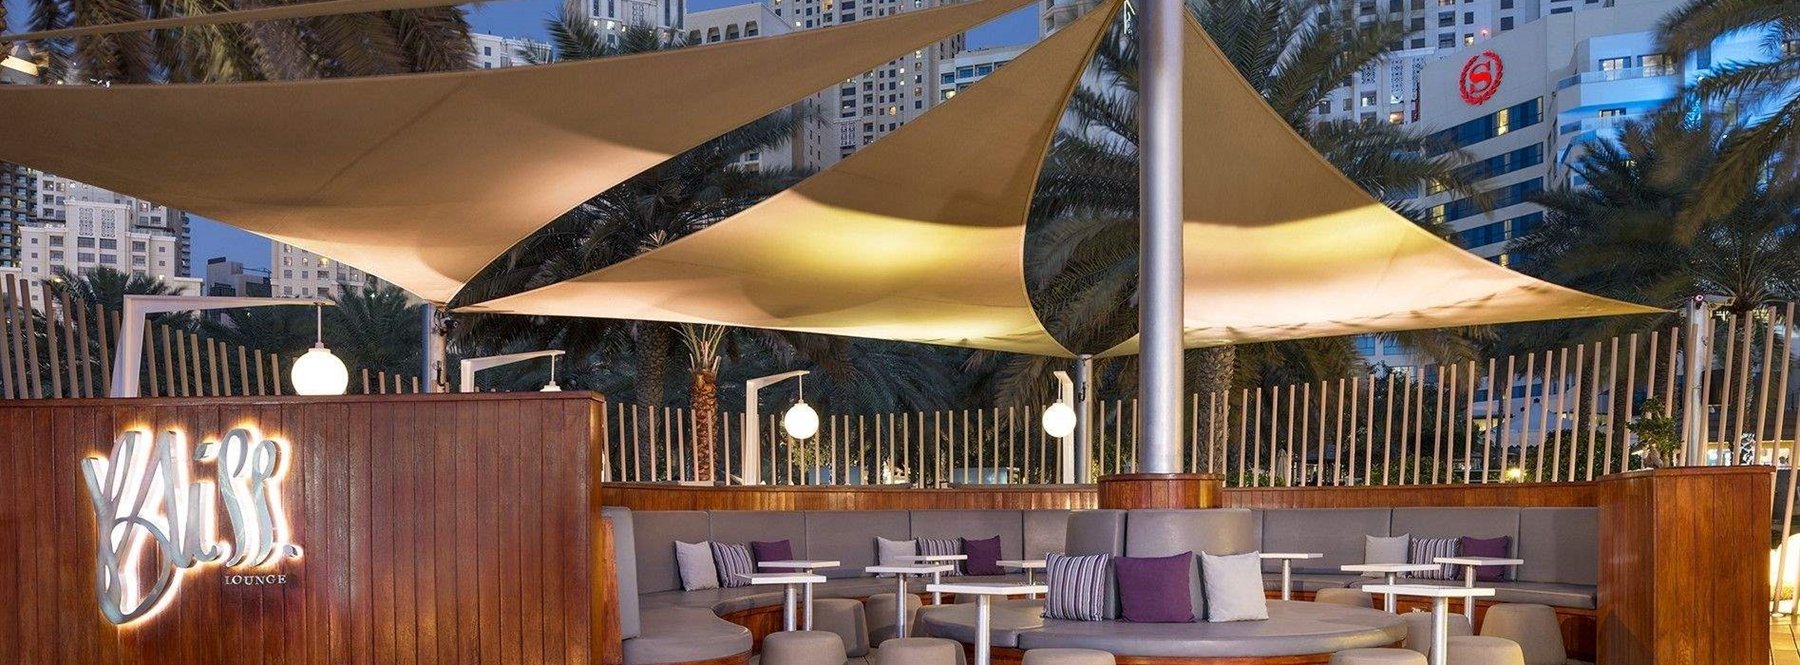 Bliss Lounge l Lounge Dubai